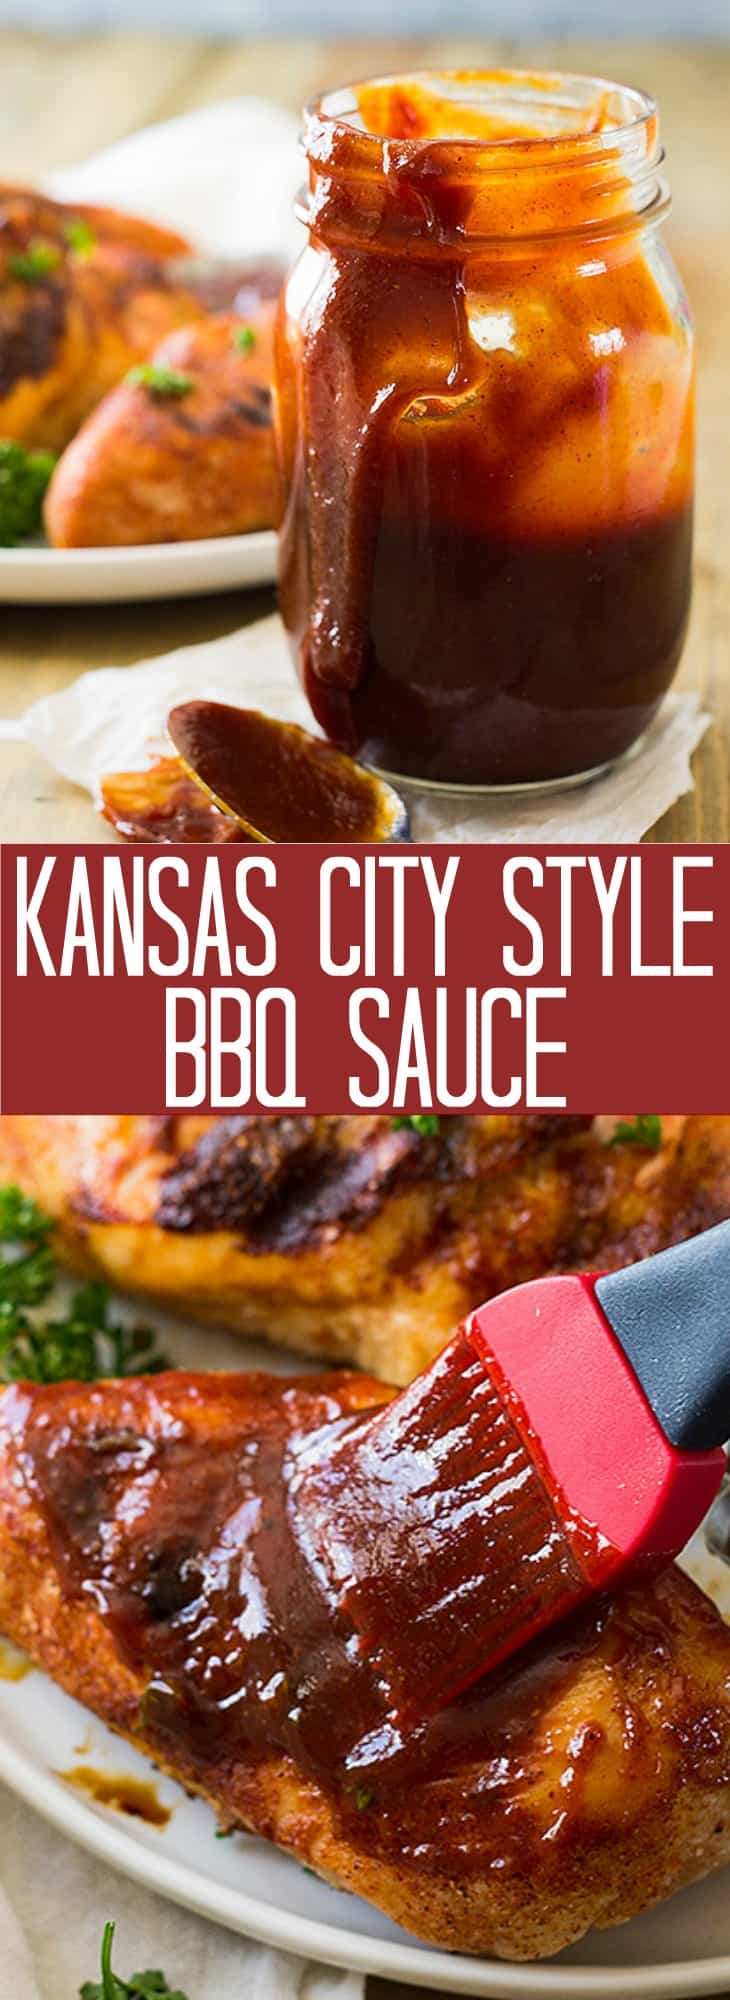 Kansas City Style BBQ Sauce | Countryside Cravings